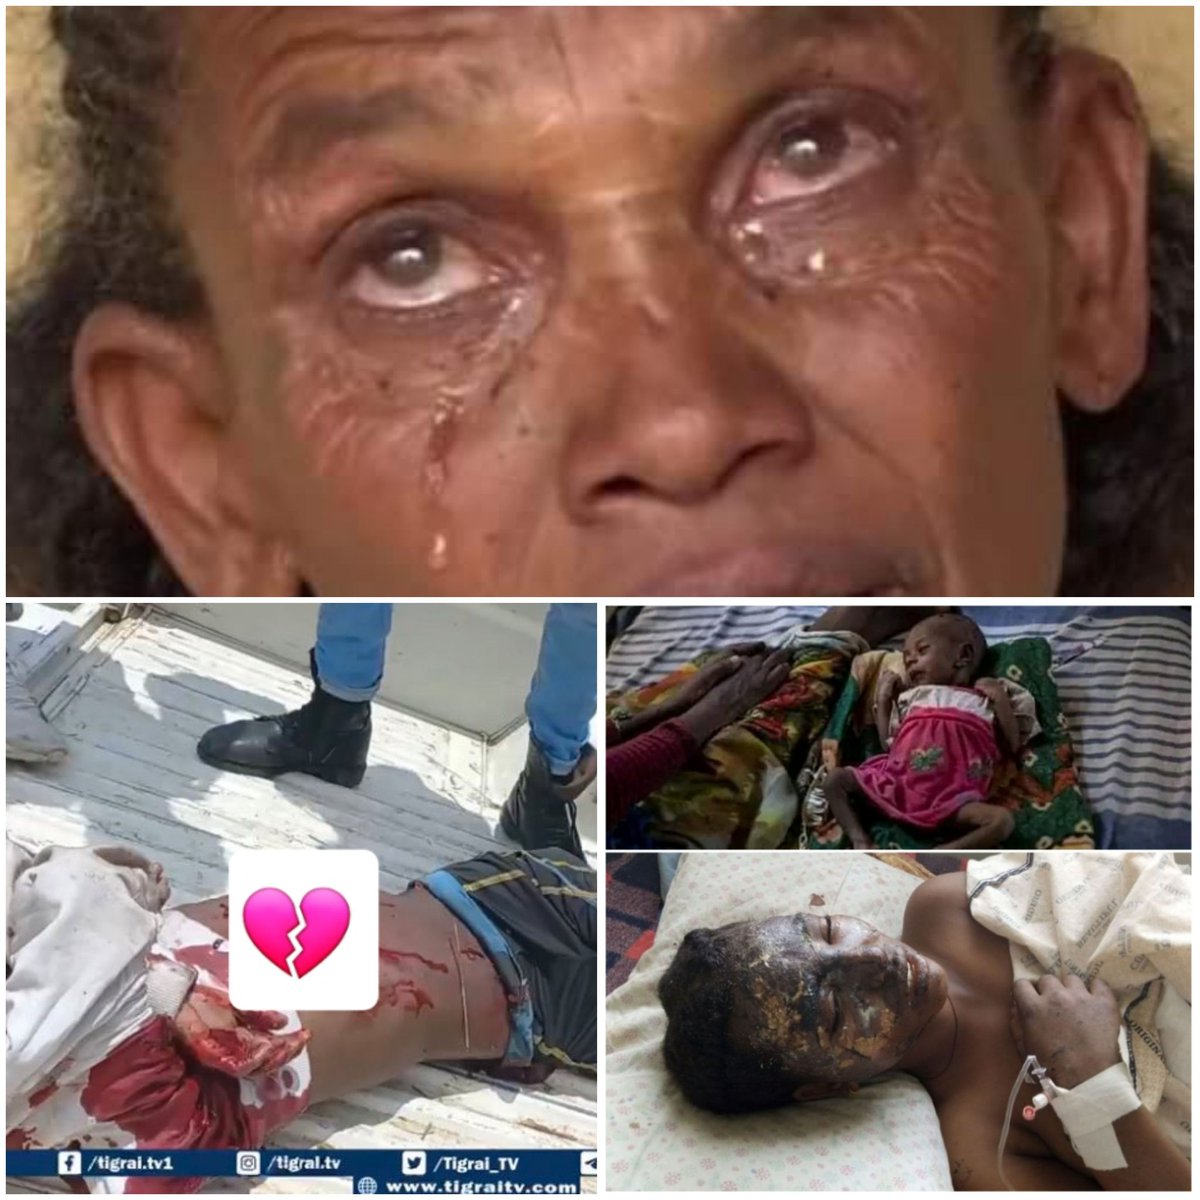 Day 694:#TigrayGenocide💔💔💔 
Tigray is in dark
Tigray is suffering
Tigray is bleeding
Tigray is unde siege 
#TigrayIsUnderAttack 
#StopBombingTigray 
#StopWarOnTigray 
#StopTigrayGenocide 
#EndTigraySieg 
@hrw @amnesty @UN_HRC @eu_eeas @SenateForeign @SFRCdems @StateDeptSpox